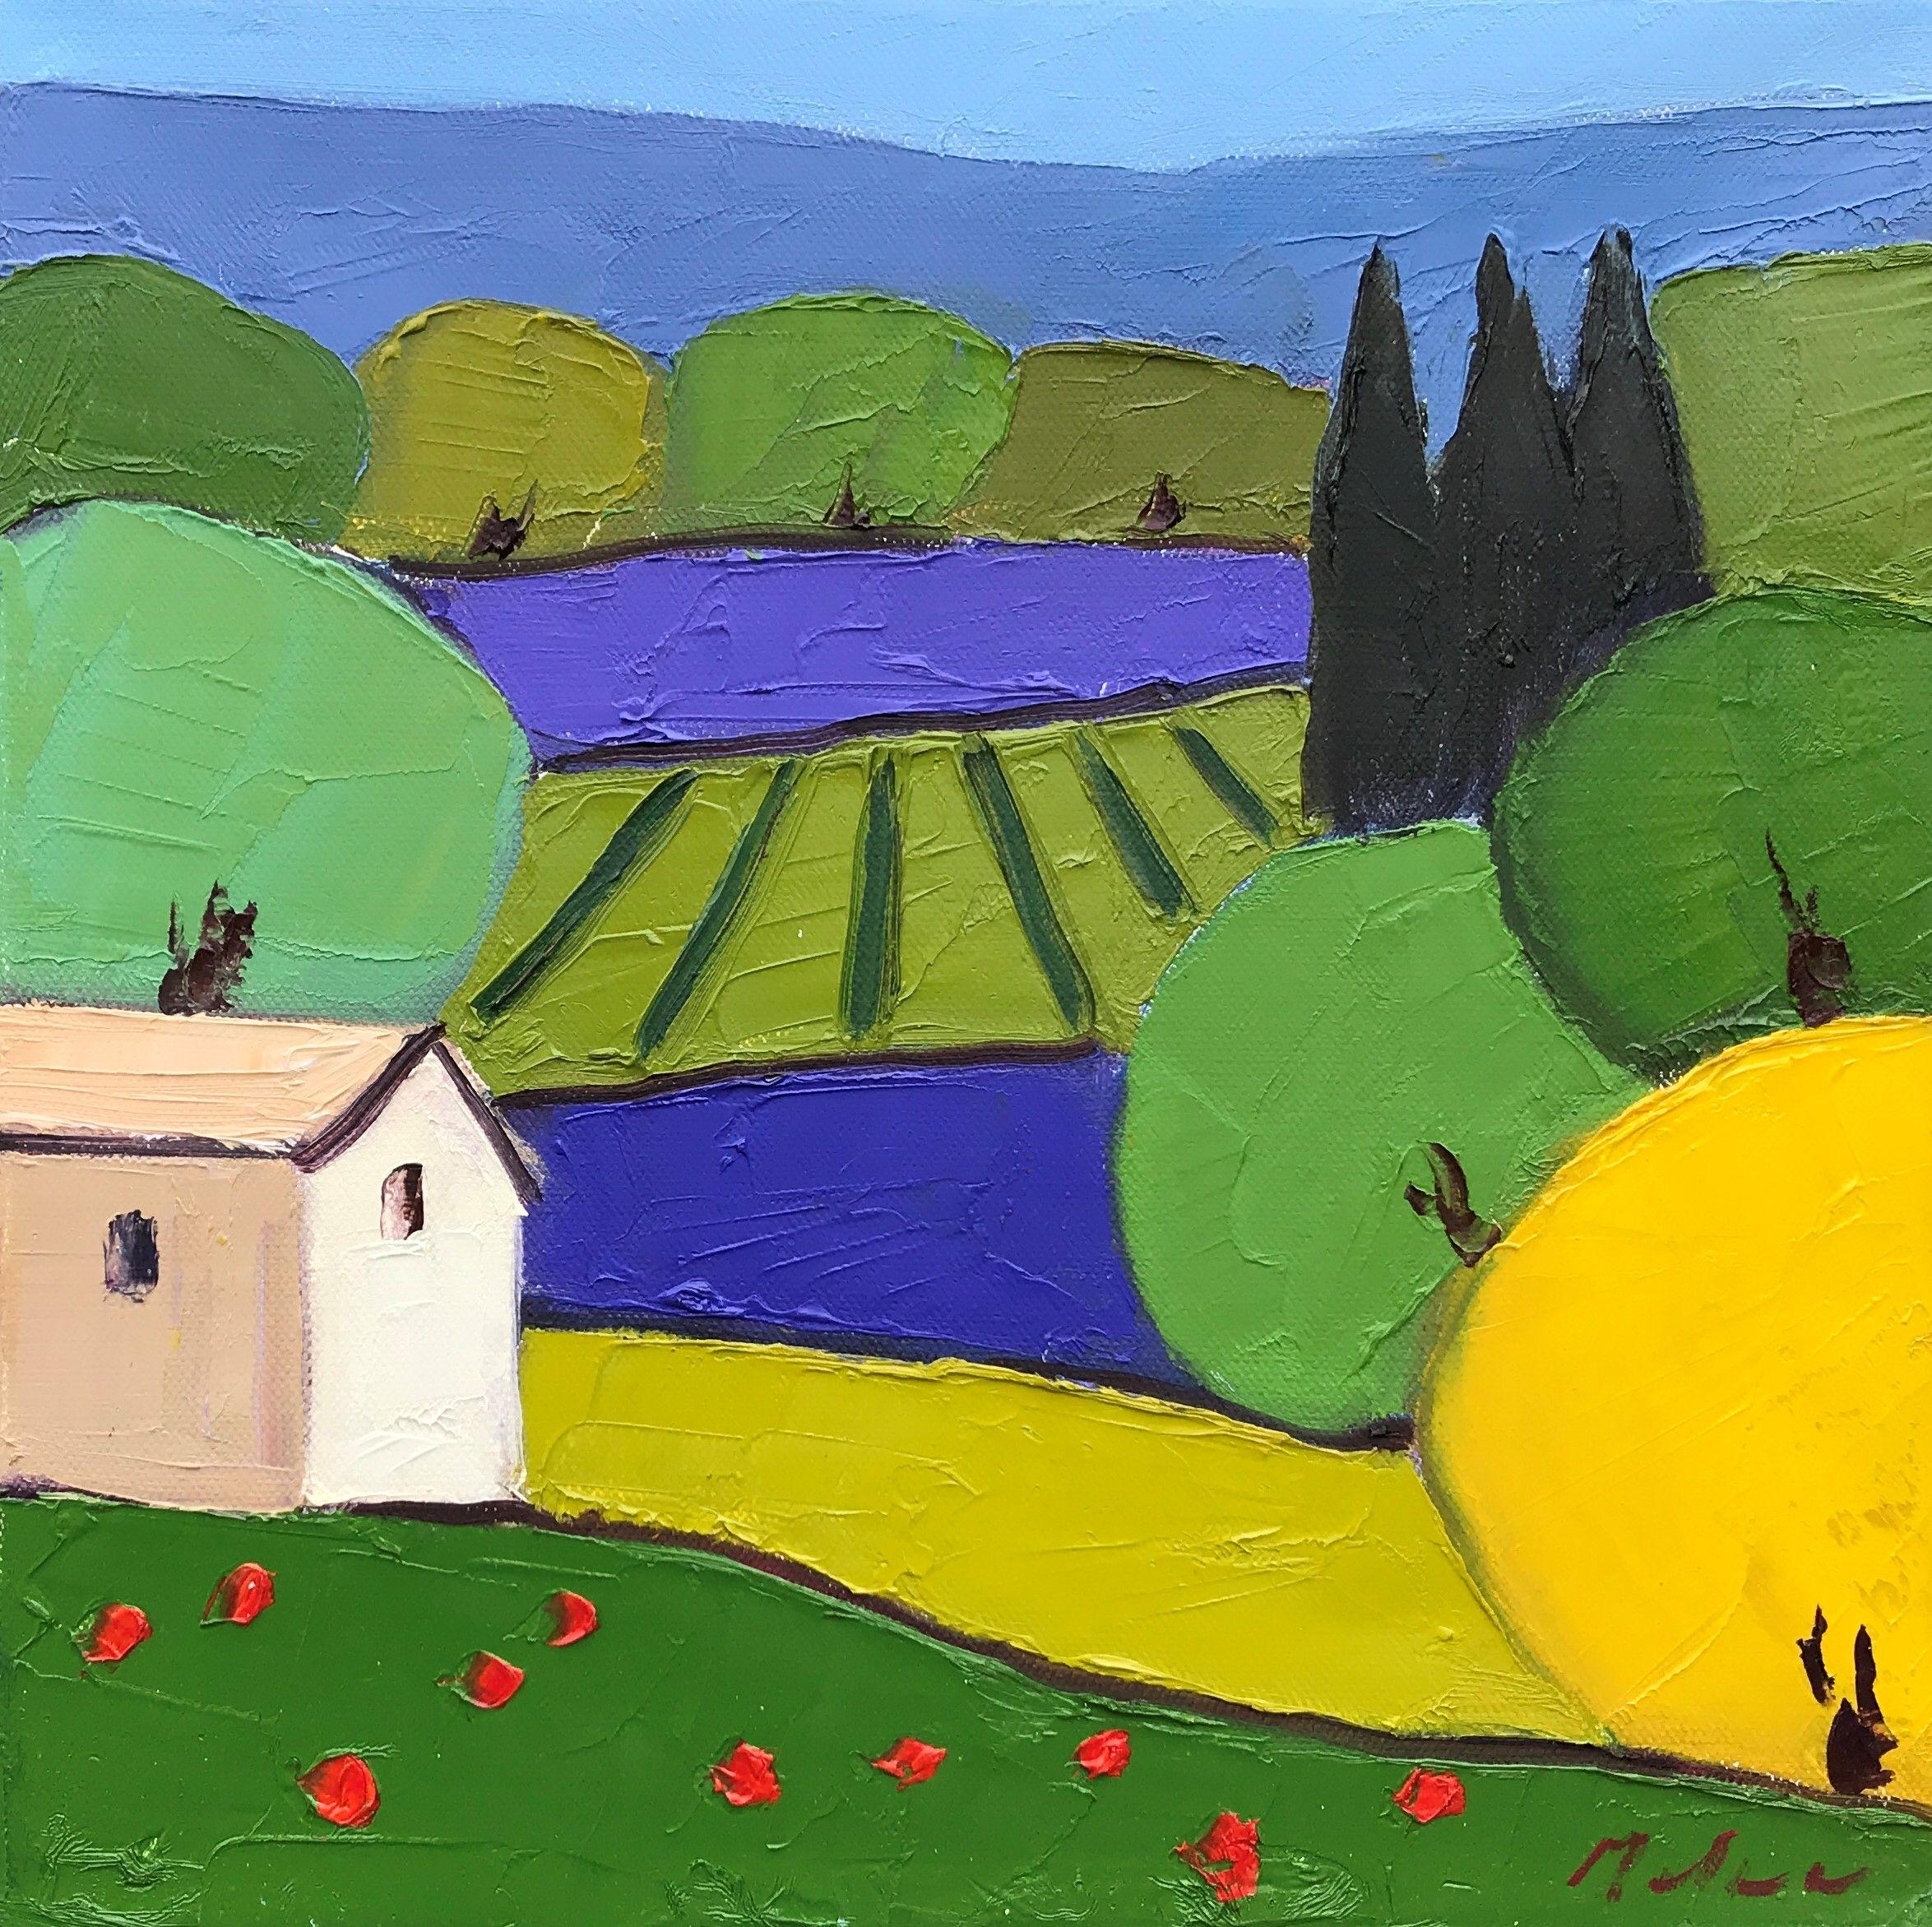 Mehran Rashidfarokhy Landscape Painting - Red Poppies, Painting, Oil on Canvas